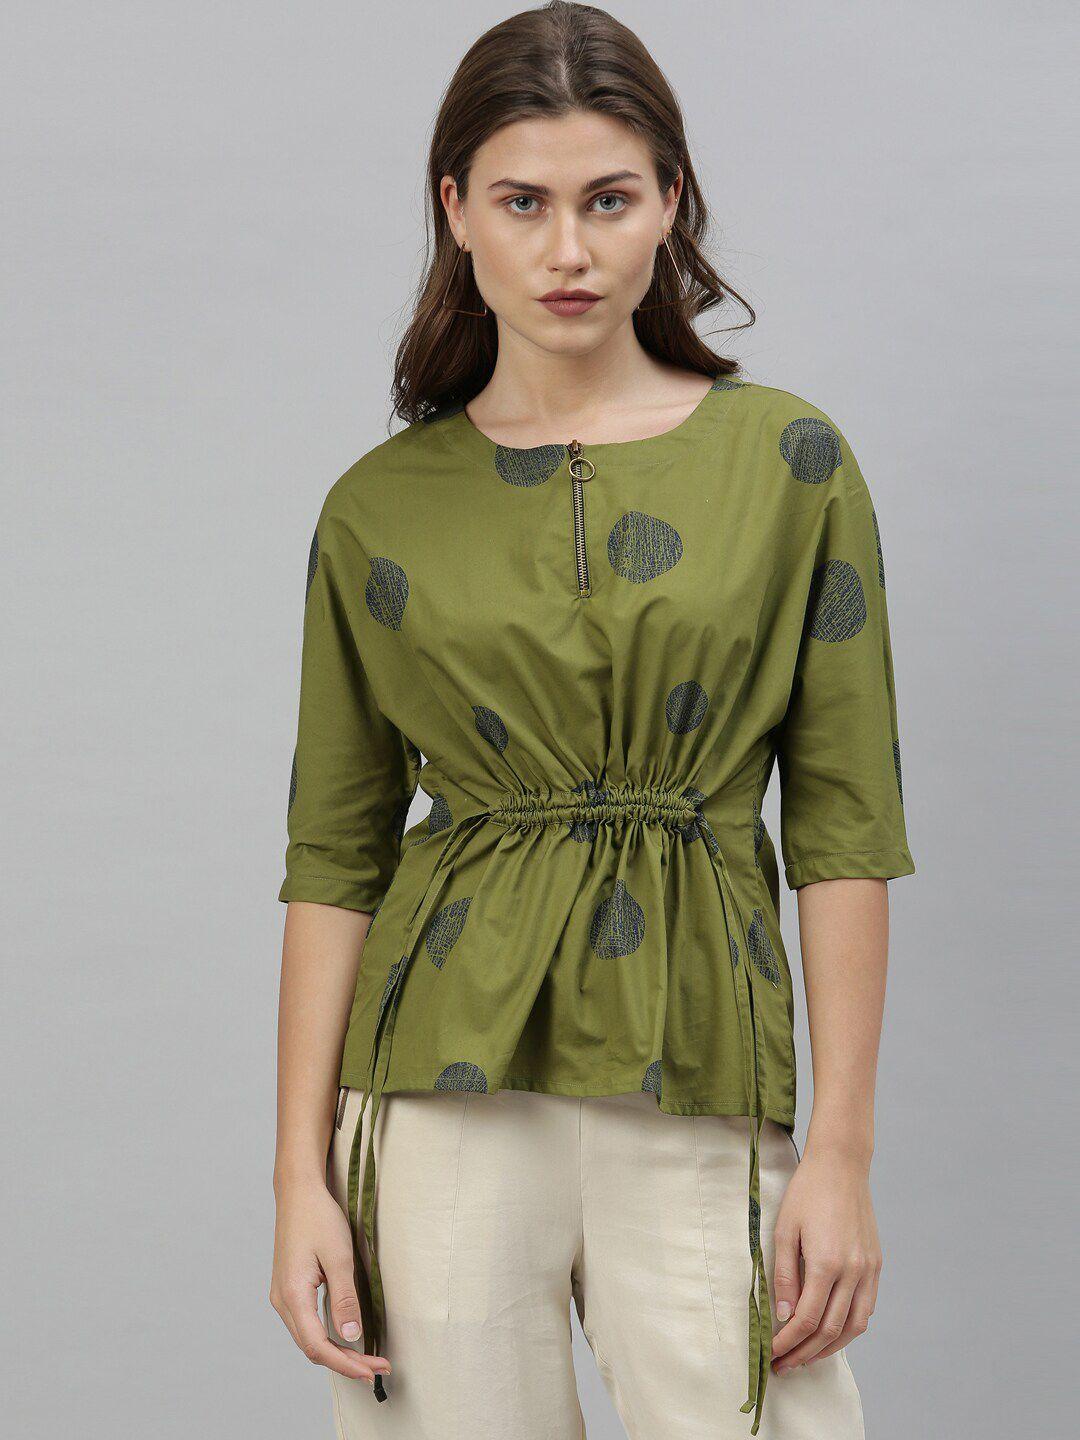 rareism-green-geometric-printed-cinched-waist-top